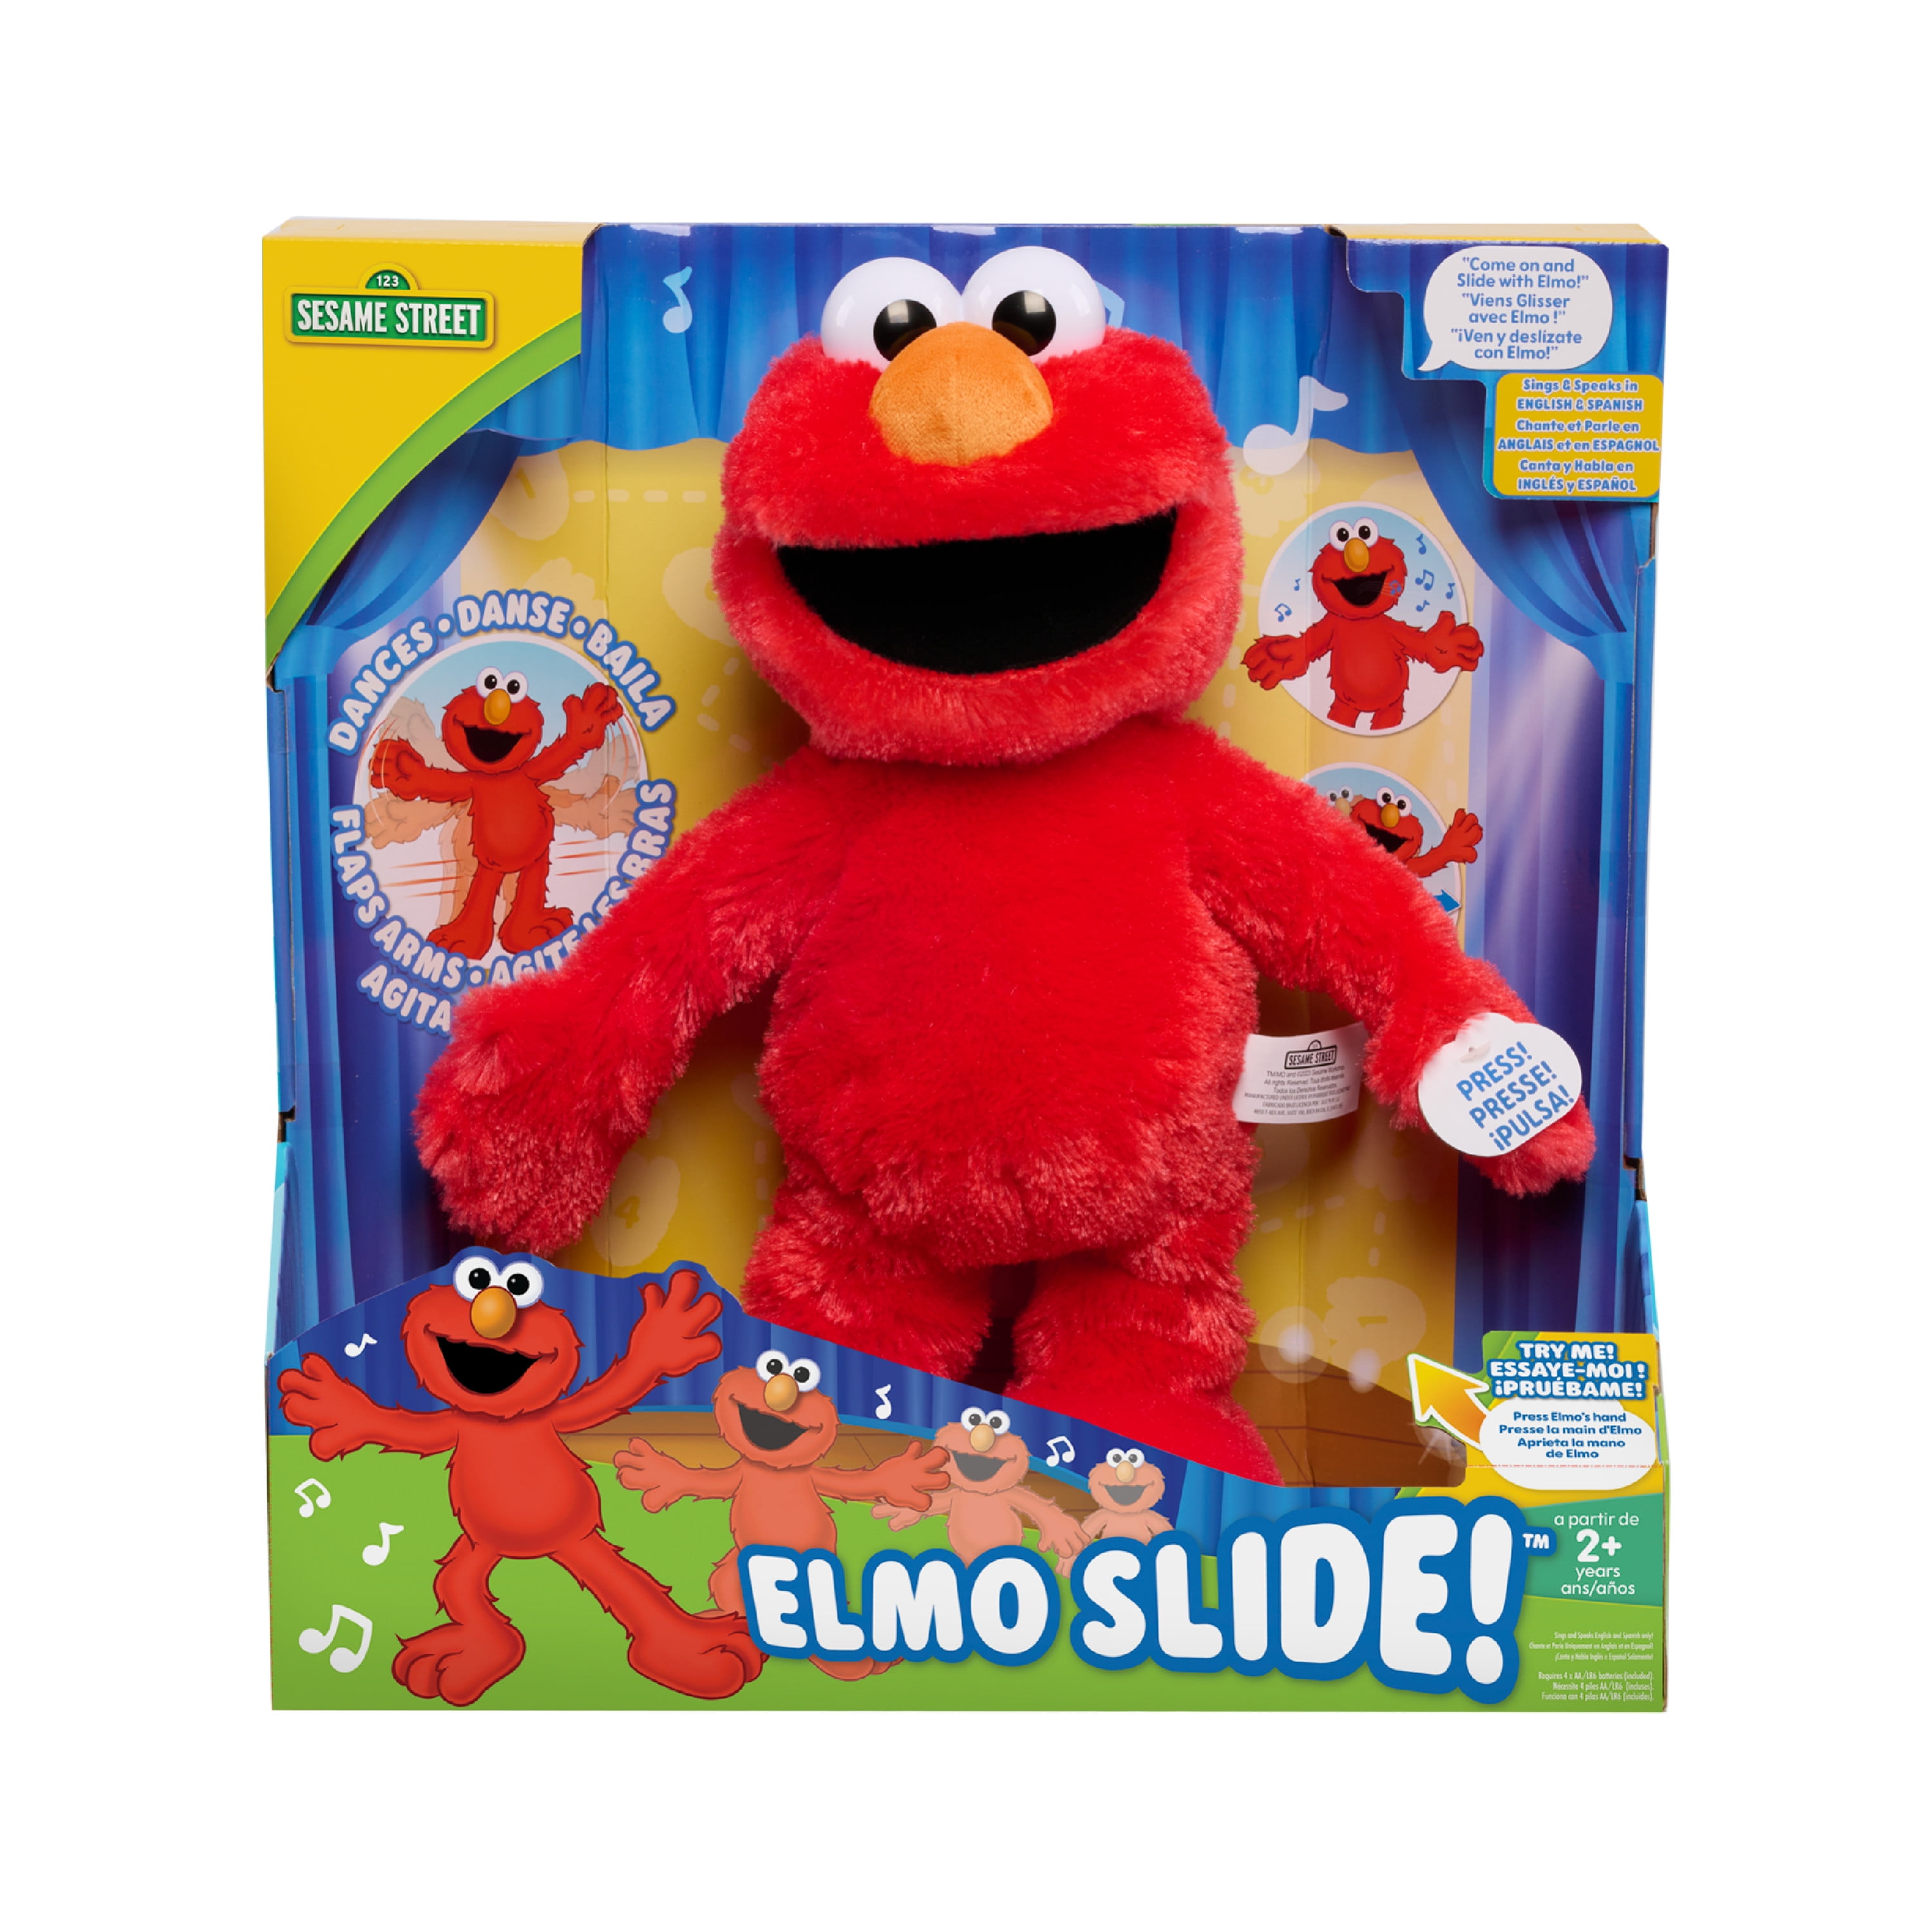 Sesame Street Elmo Slide Singing And Dancing 14 Inch Plush Kids Toys For Ages 2 Up 5d140640 5925 406d Ae0f 509cb161cd25.753a4b5239a0b8b2aab64ff62b1055a9 